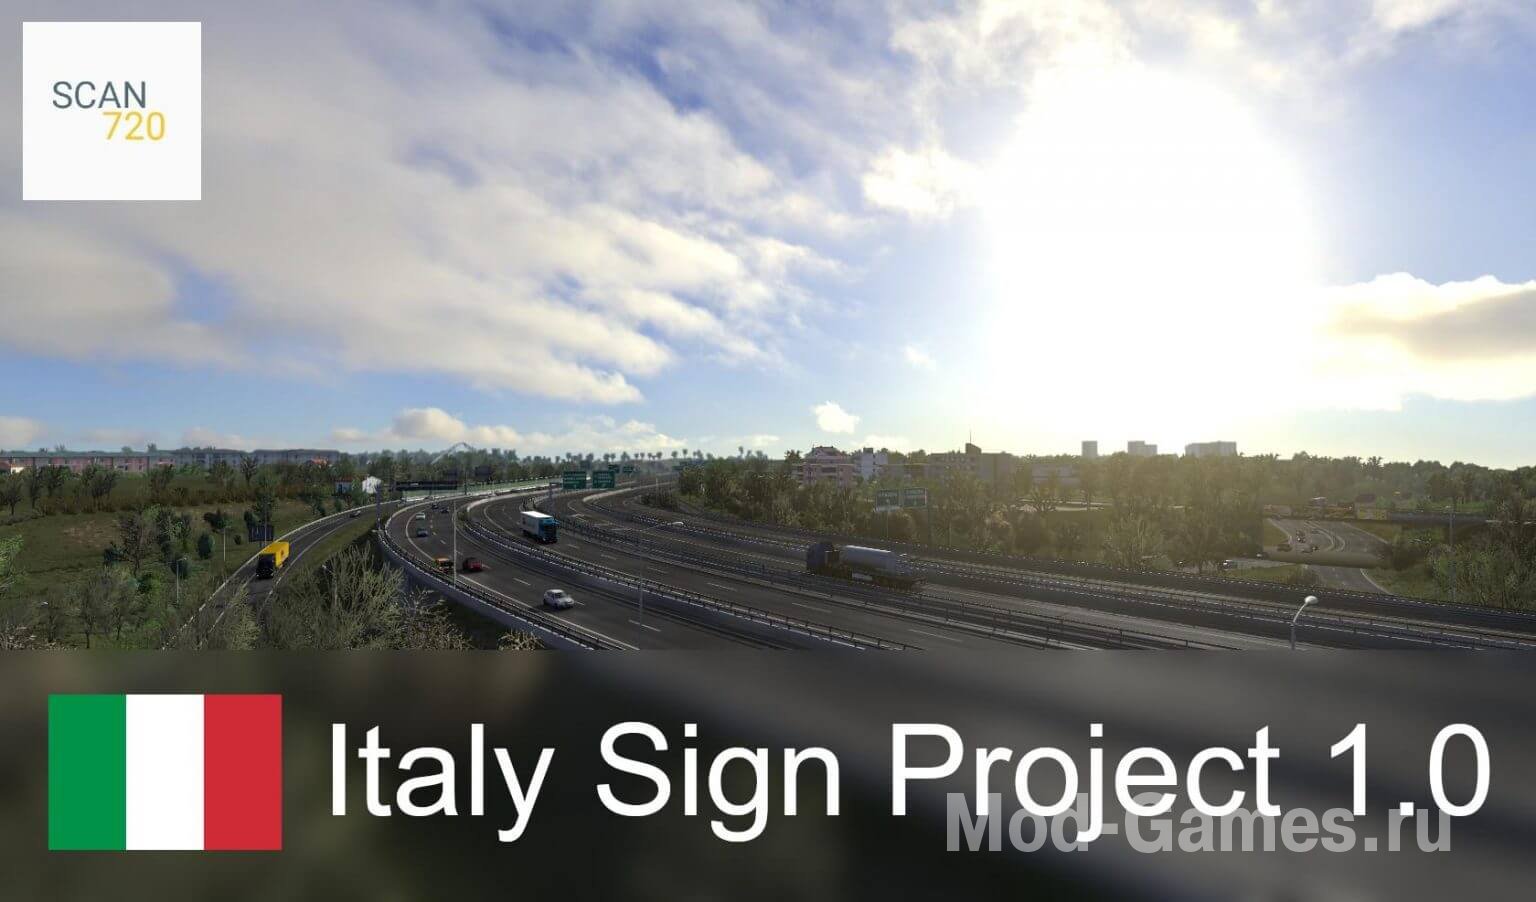 Italian Sign Project